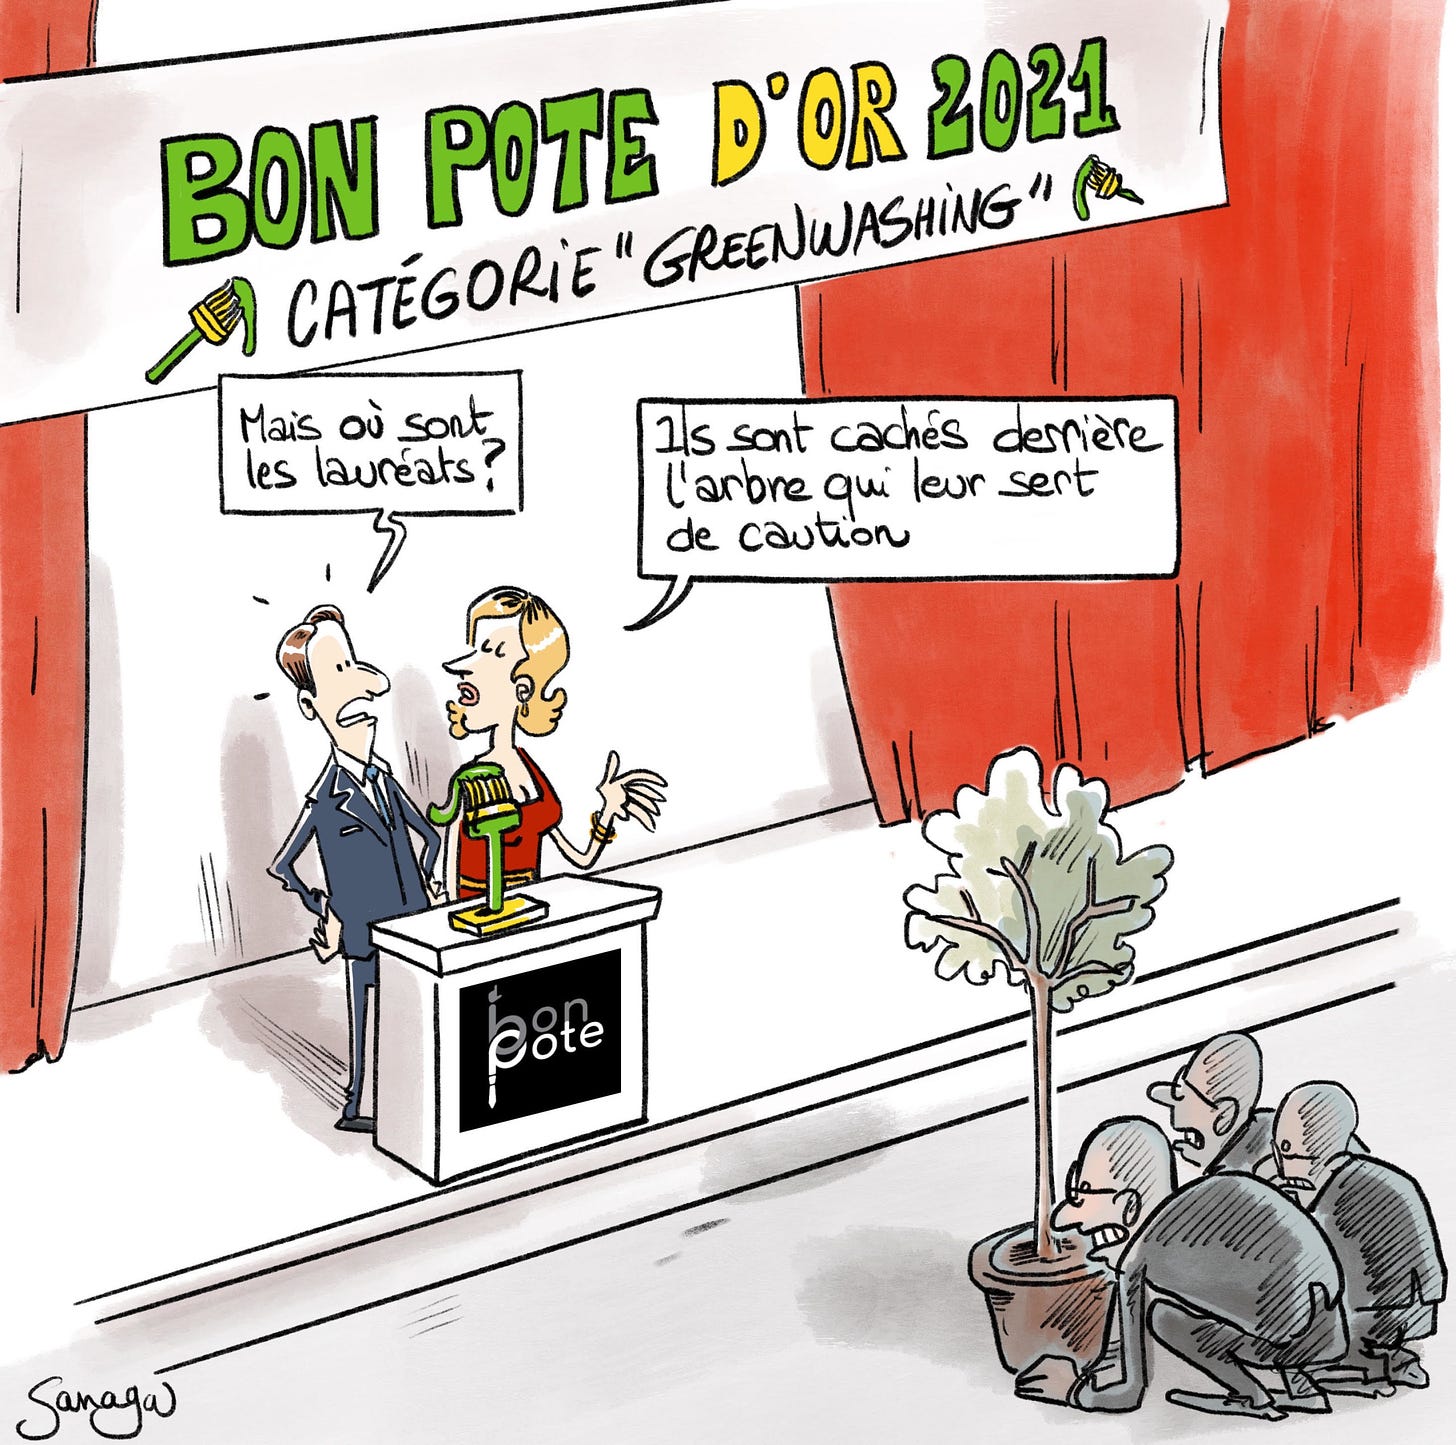 Bon Pote d'or 2021 : catégorie greenwashing